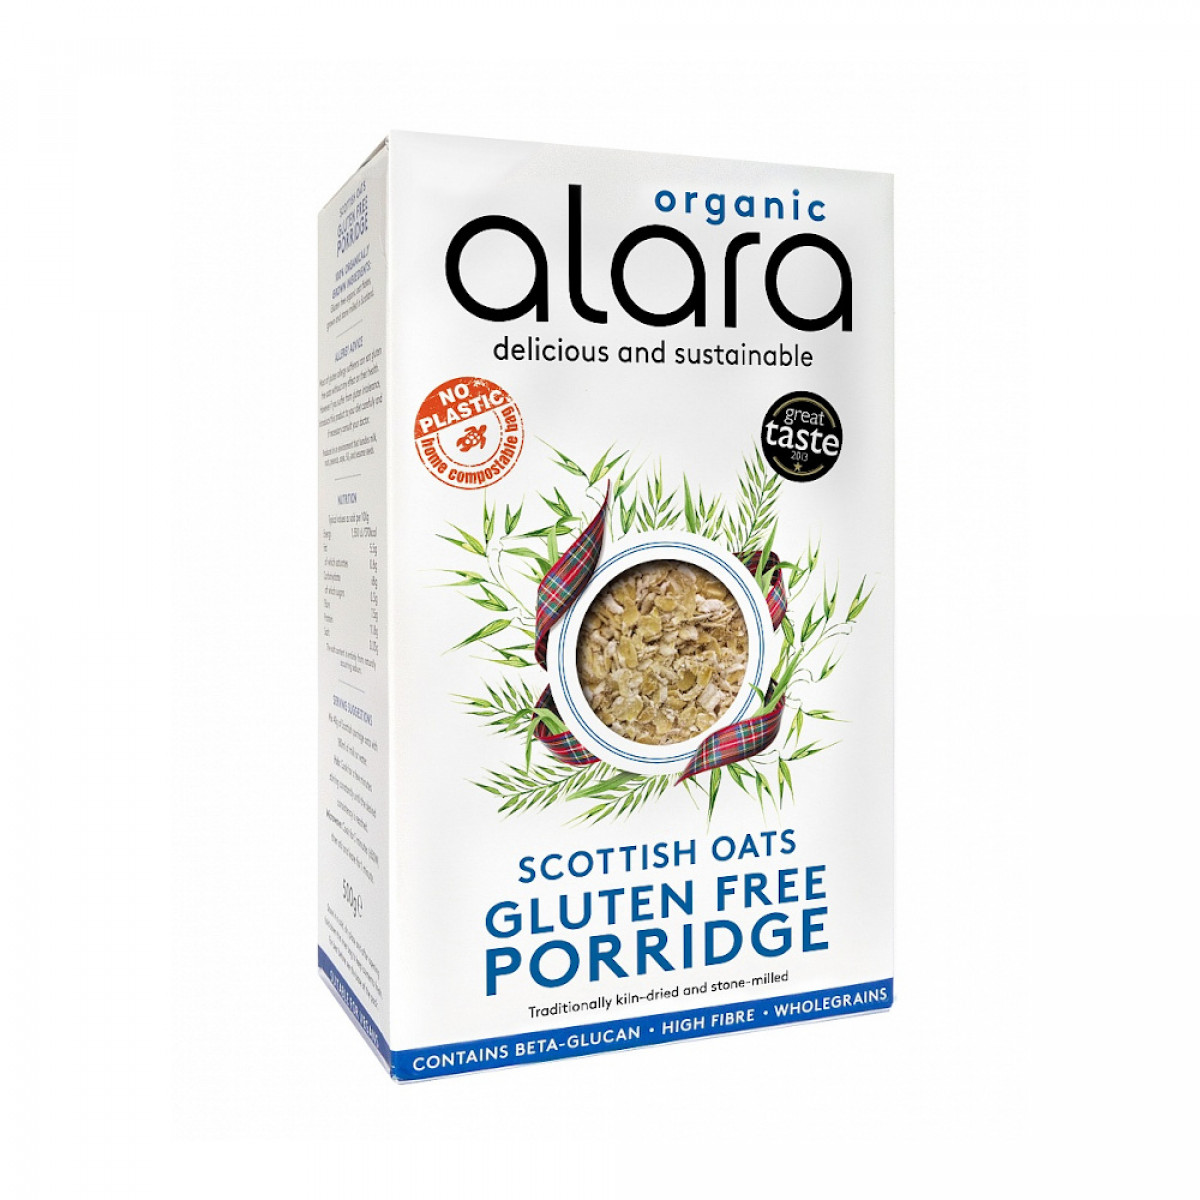 Product picture for Porridge - Scottish Oats